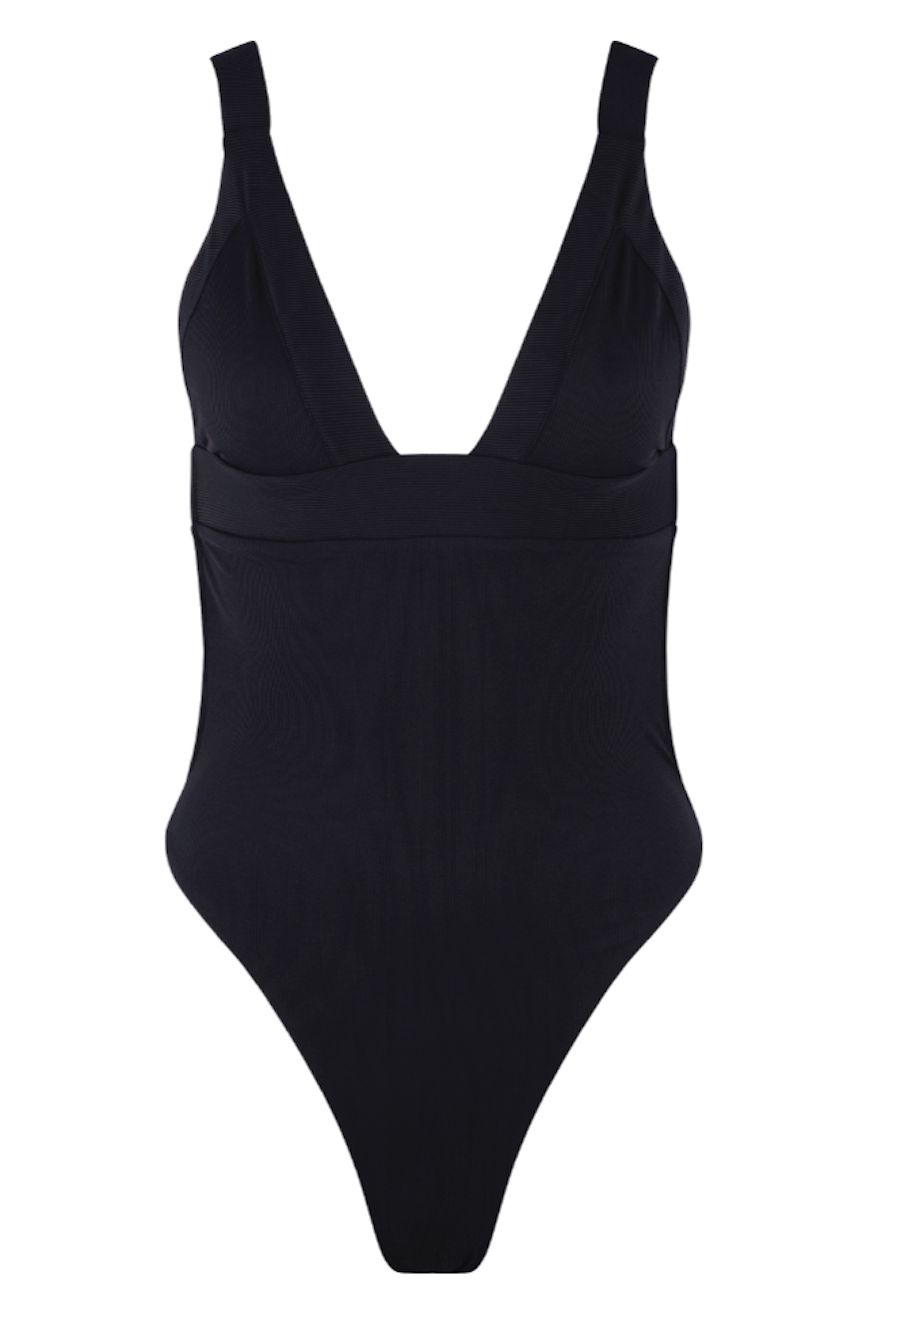 Olivia Black Rib One-Piece Swimsuit